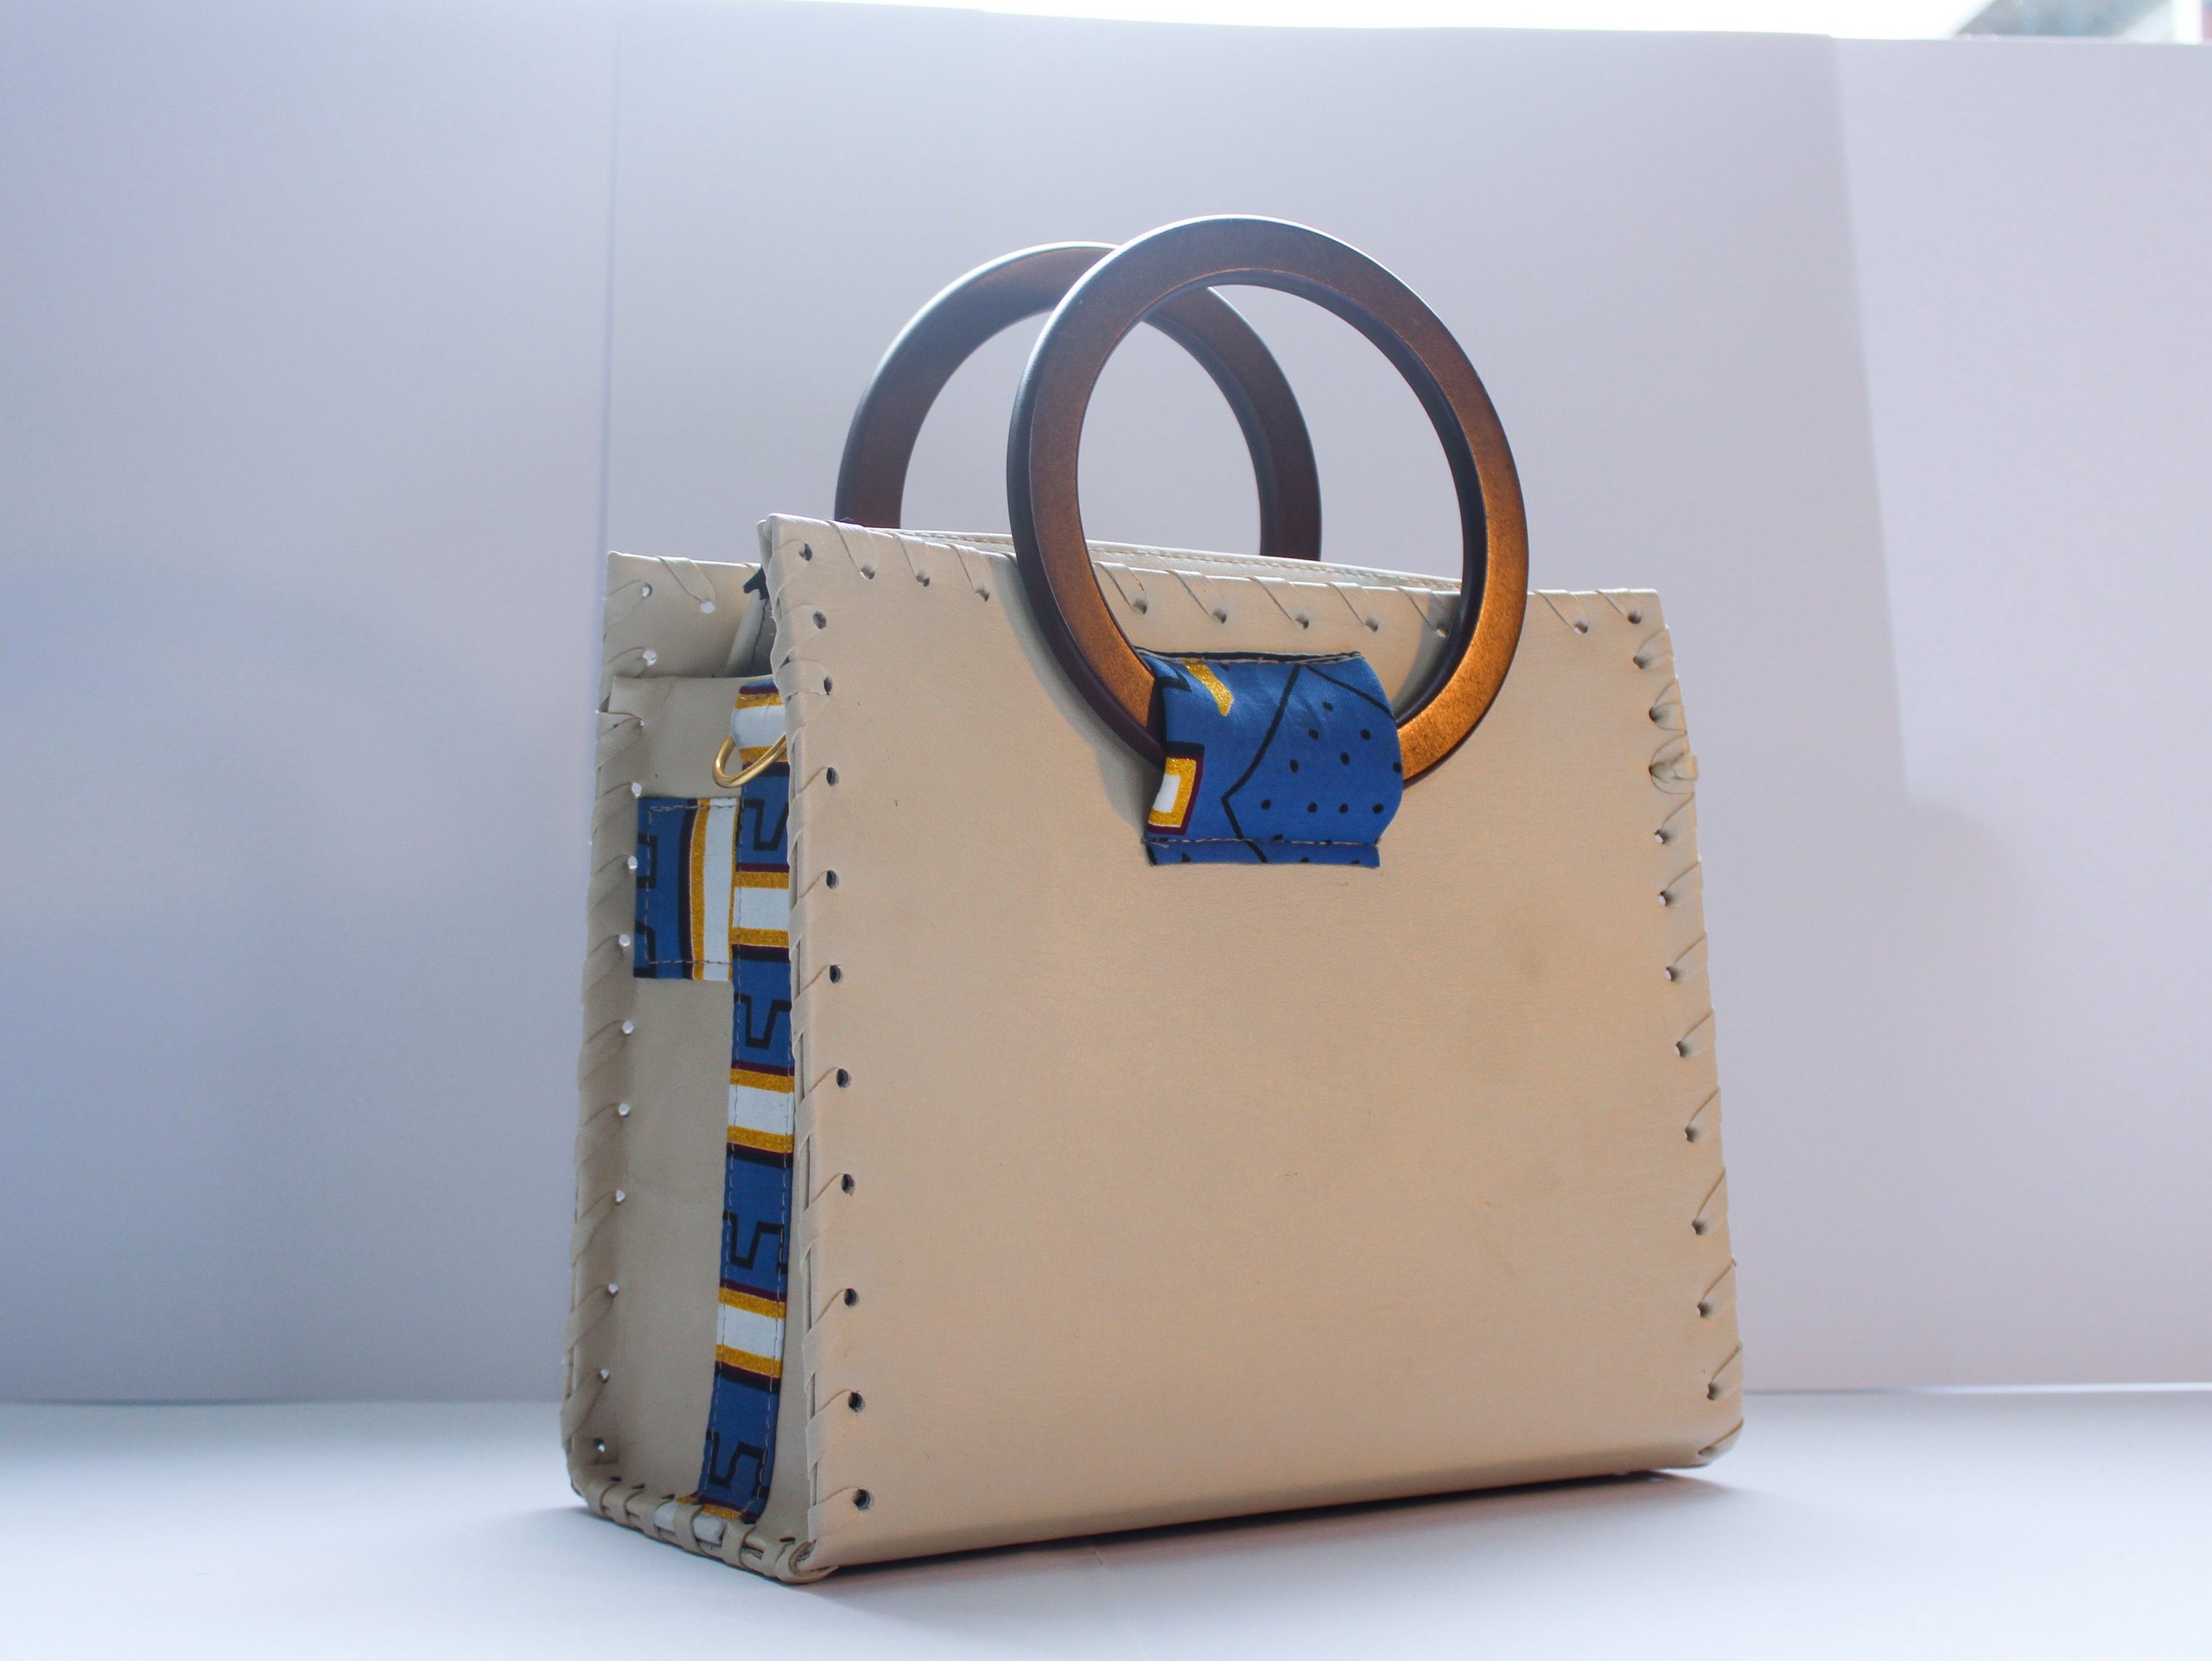 Beige Vegan Leather Handcrafted Handbag with Wooden Handles & Blue Ankara Detail | Wax Print African Fabric Bag | Shoulder Bag